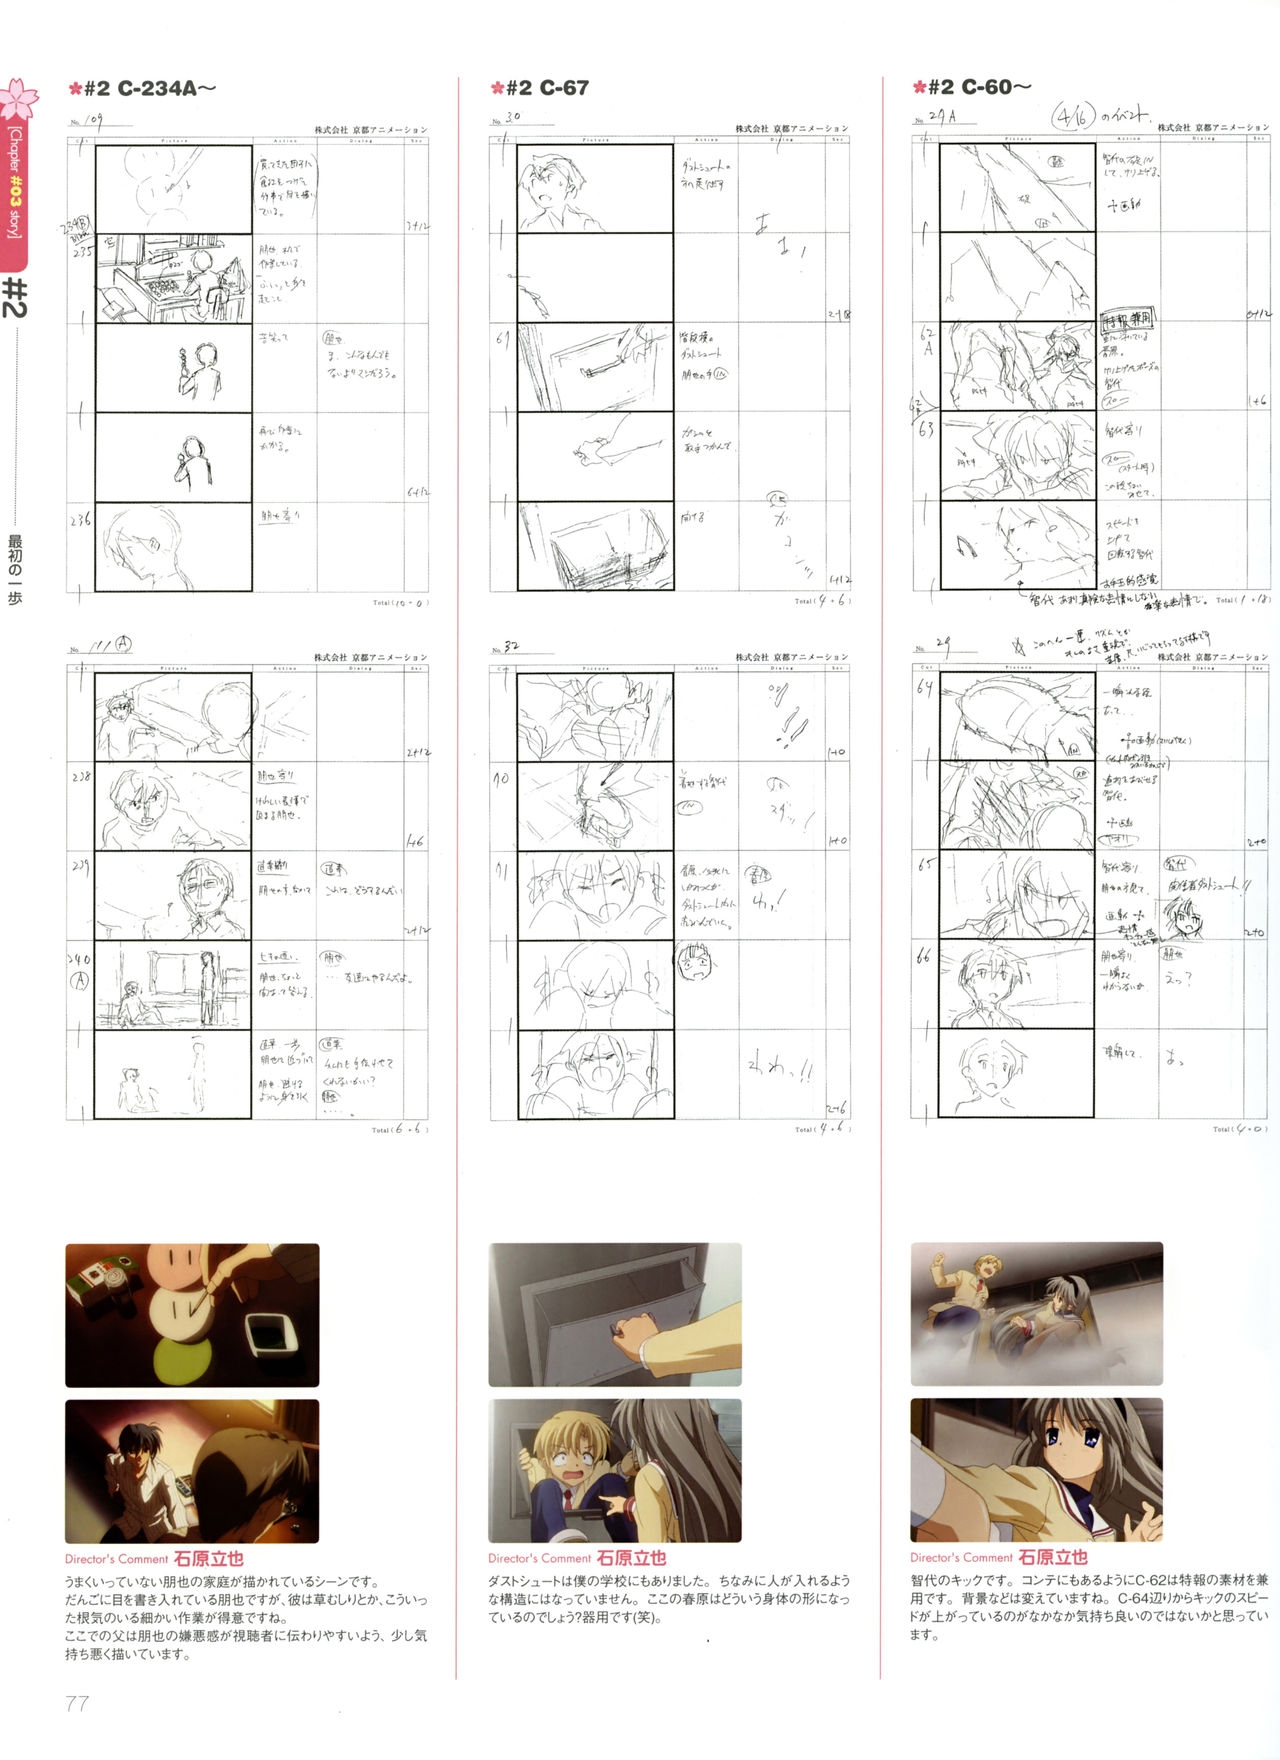 Clannad TV Animation Visual Fan Book 79